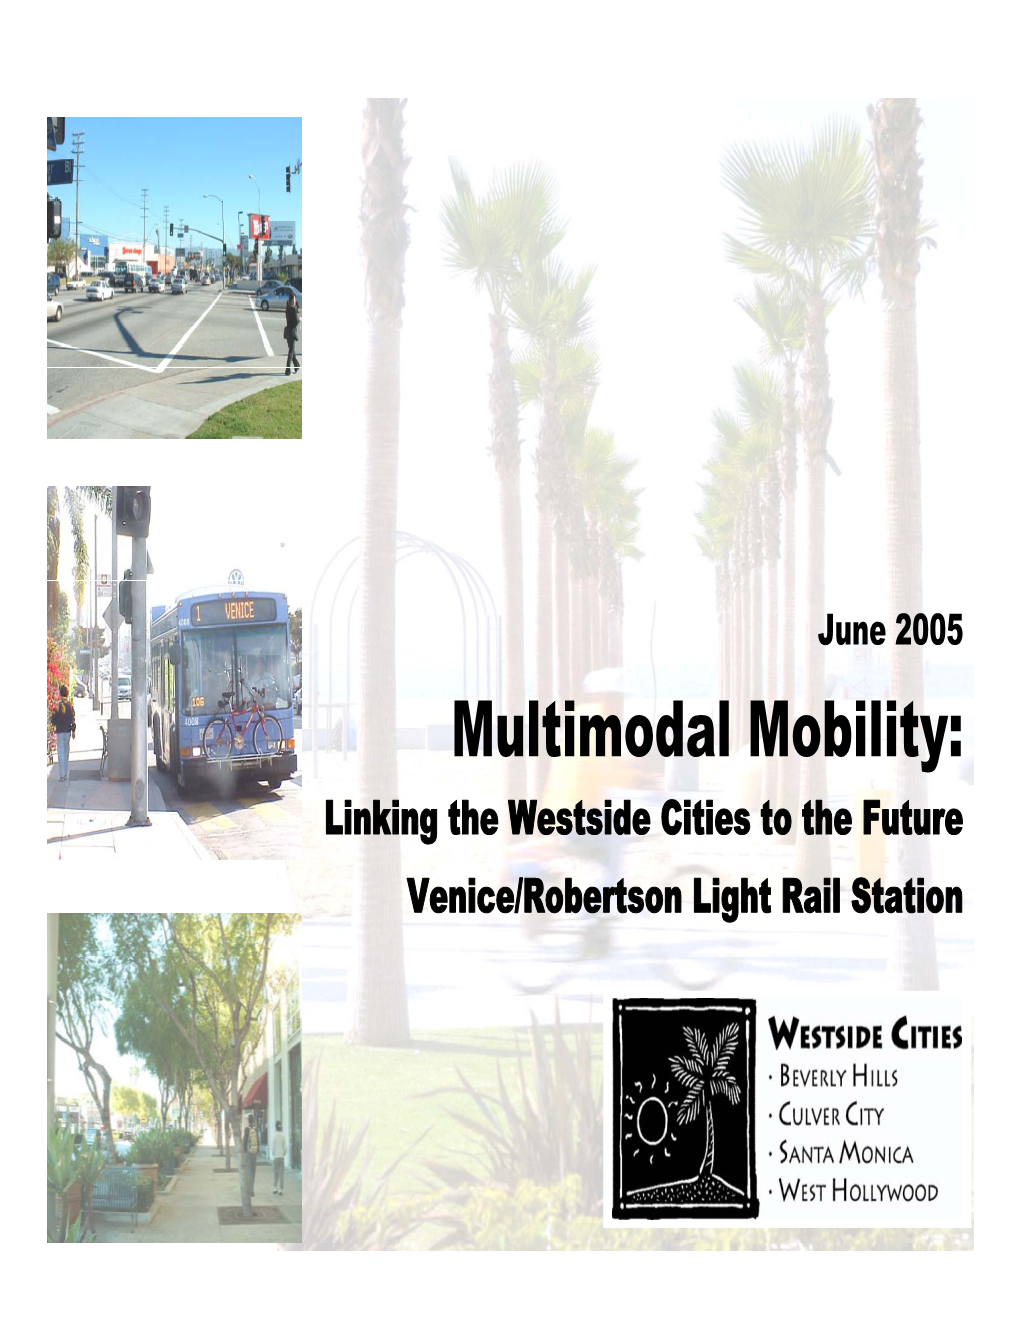 Multimodal Mobility Study